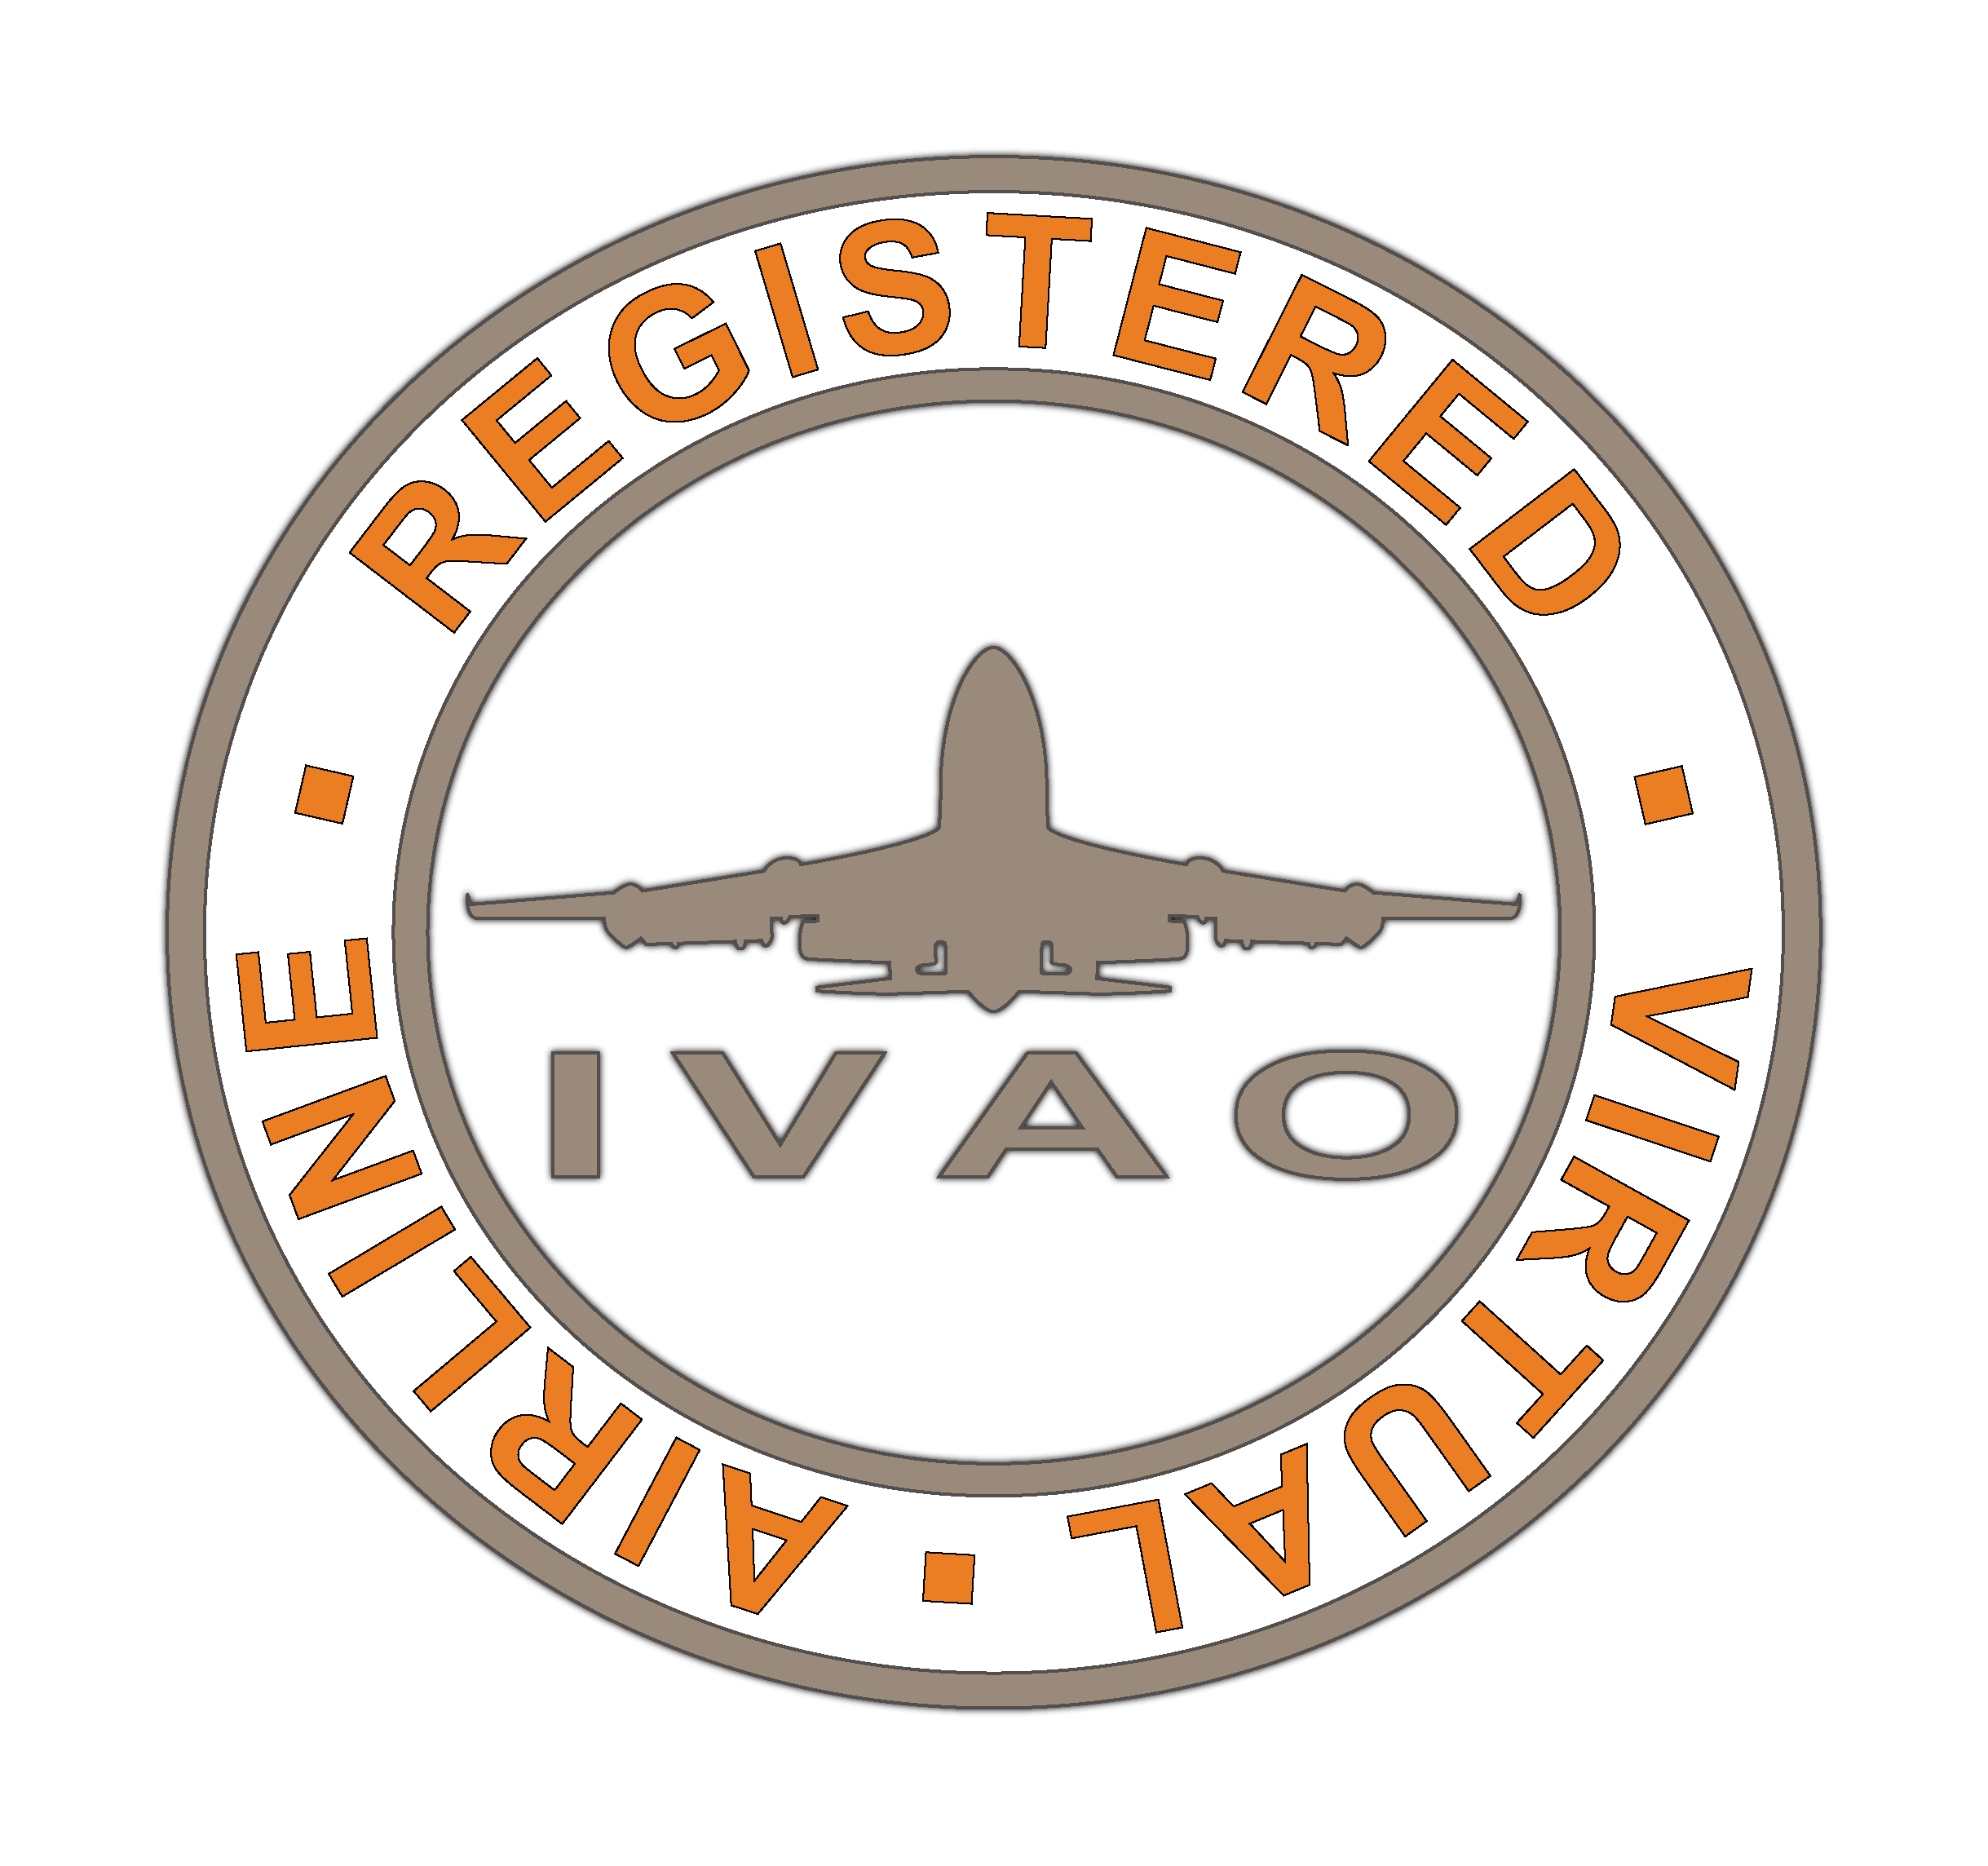 VA_logo